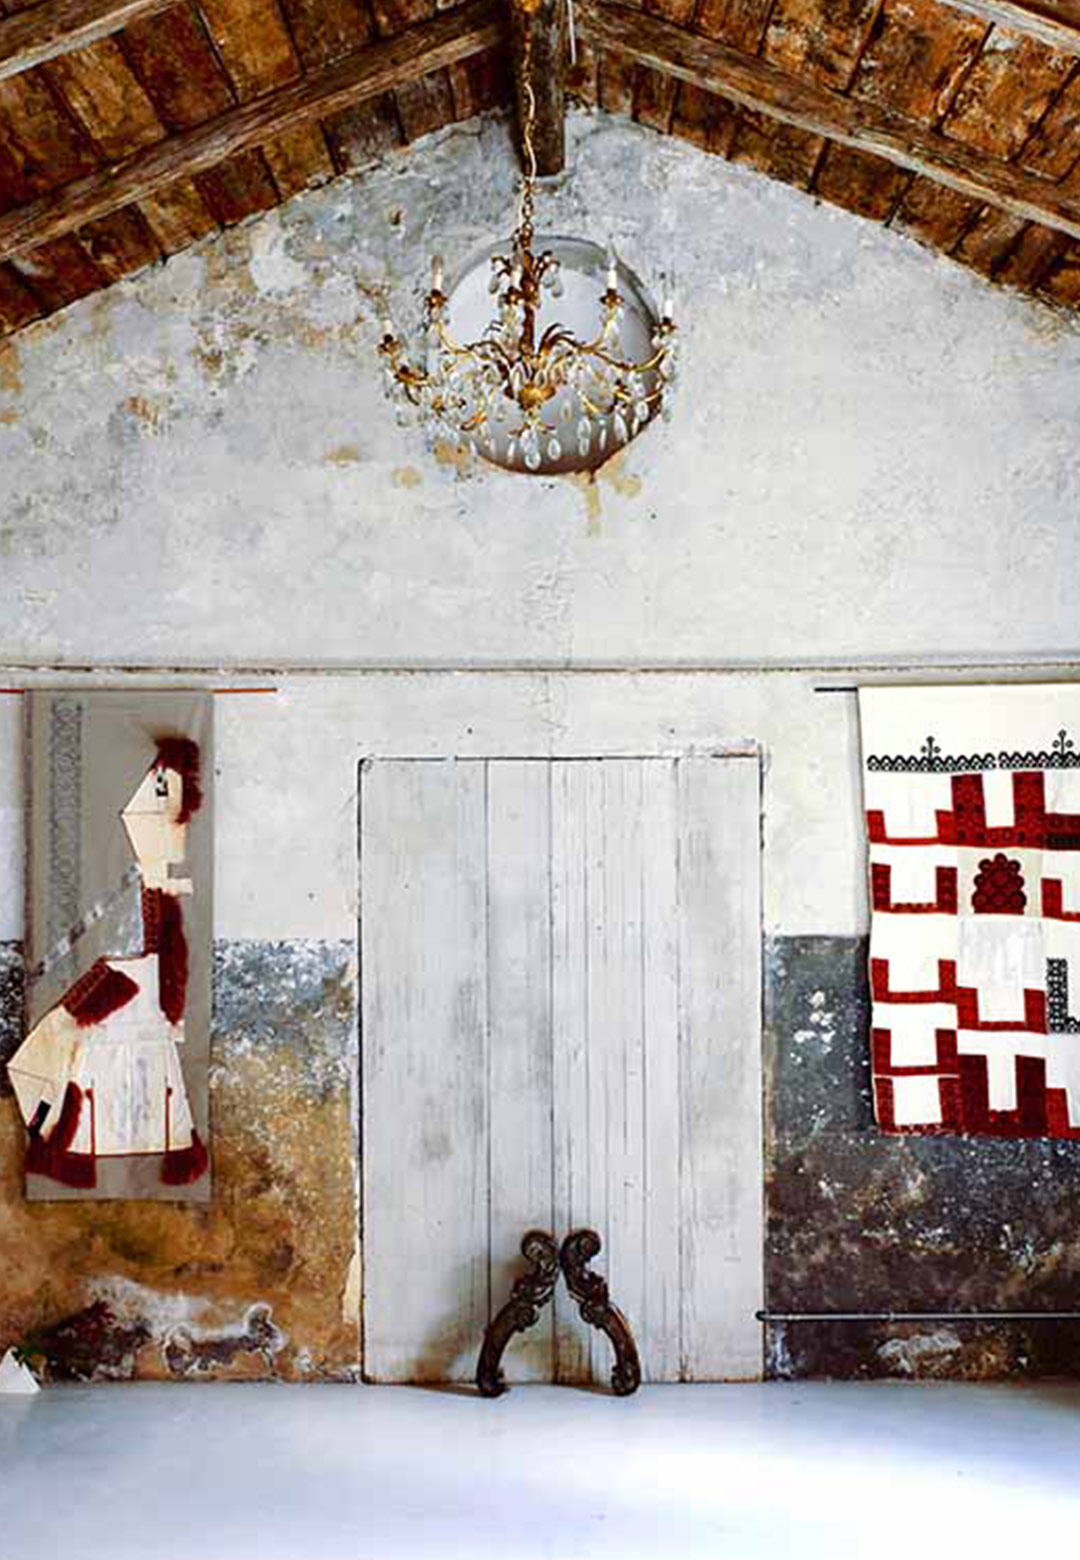 House of Ita’s Trasposizioni Collection explores femininity through tapestry